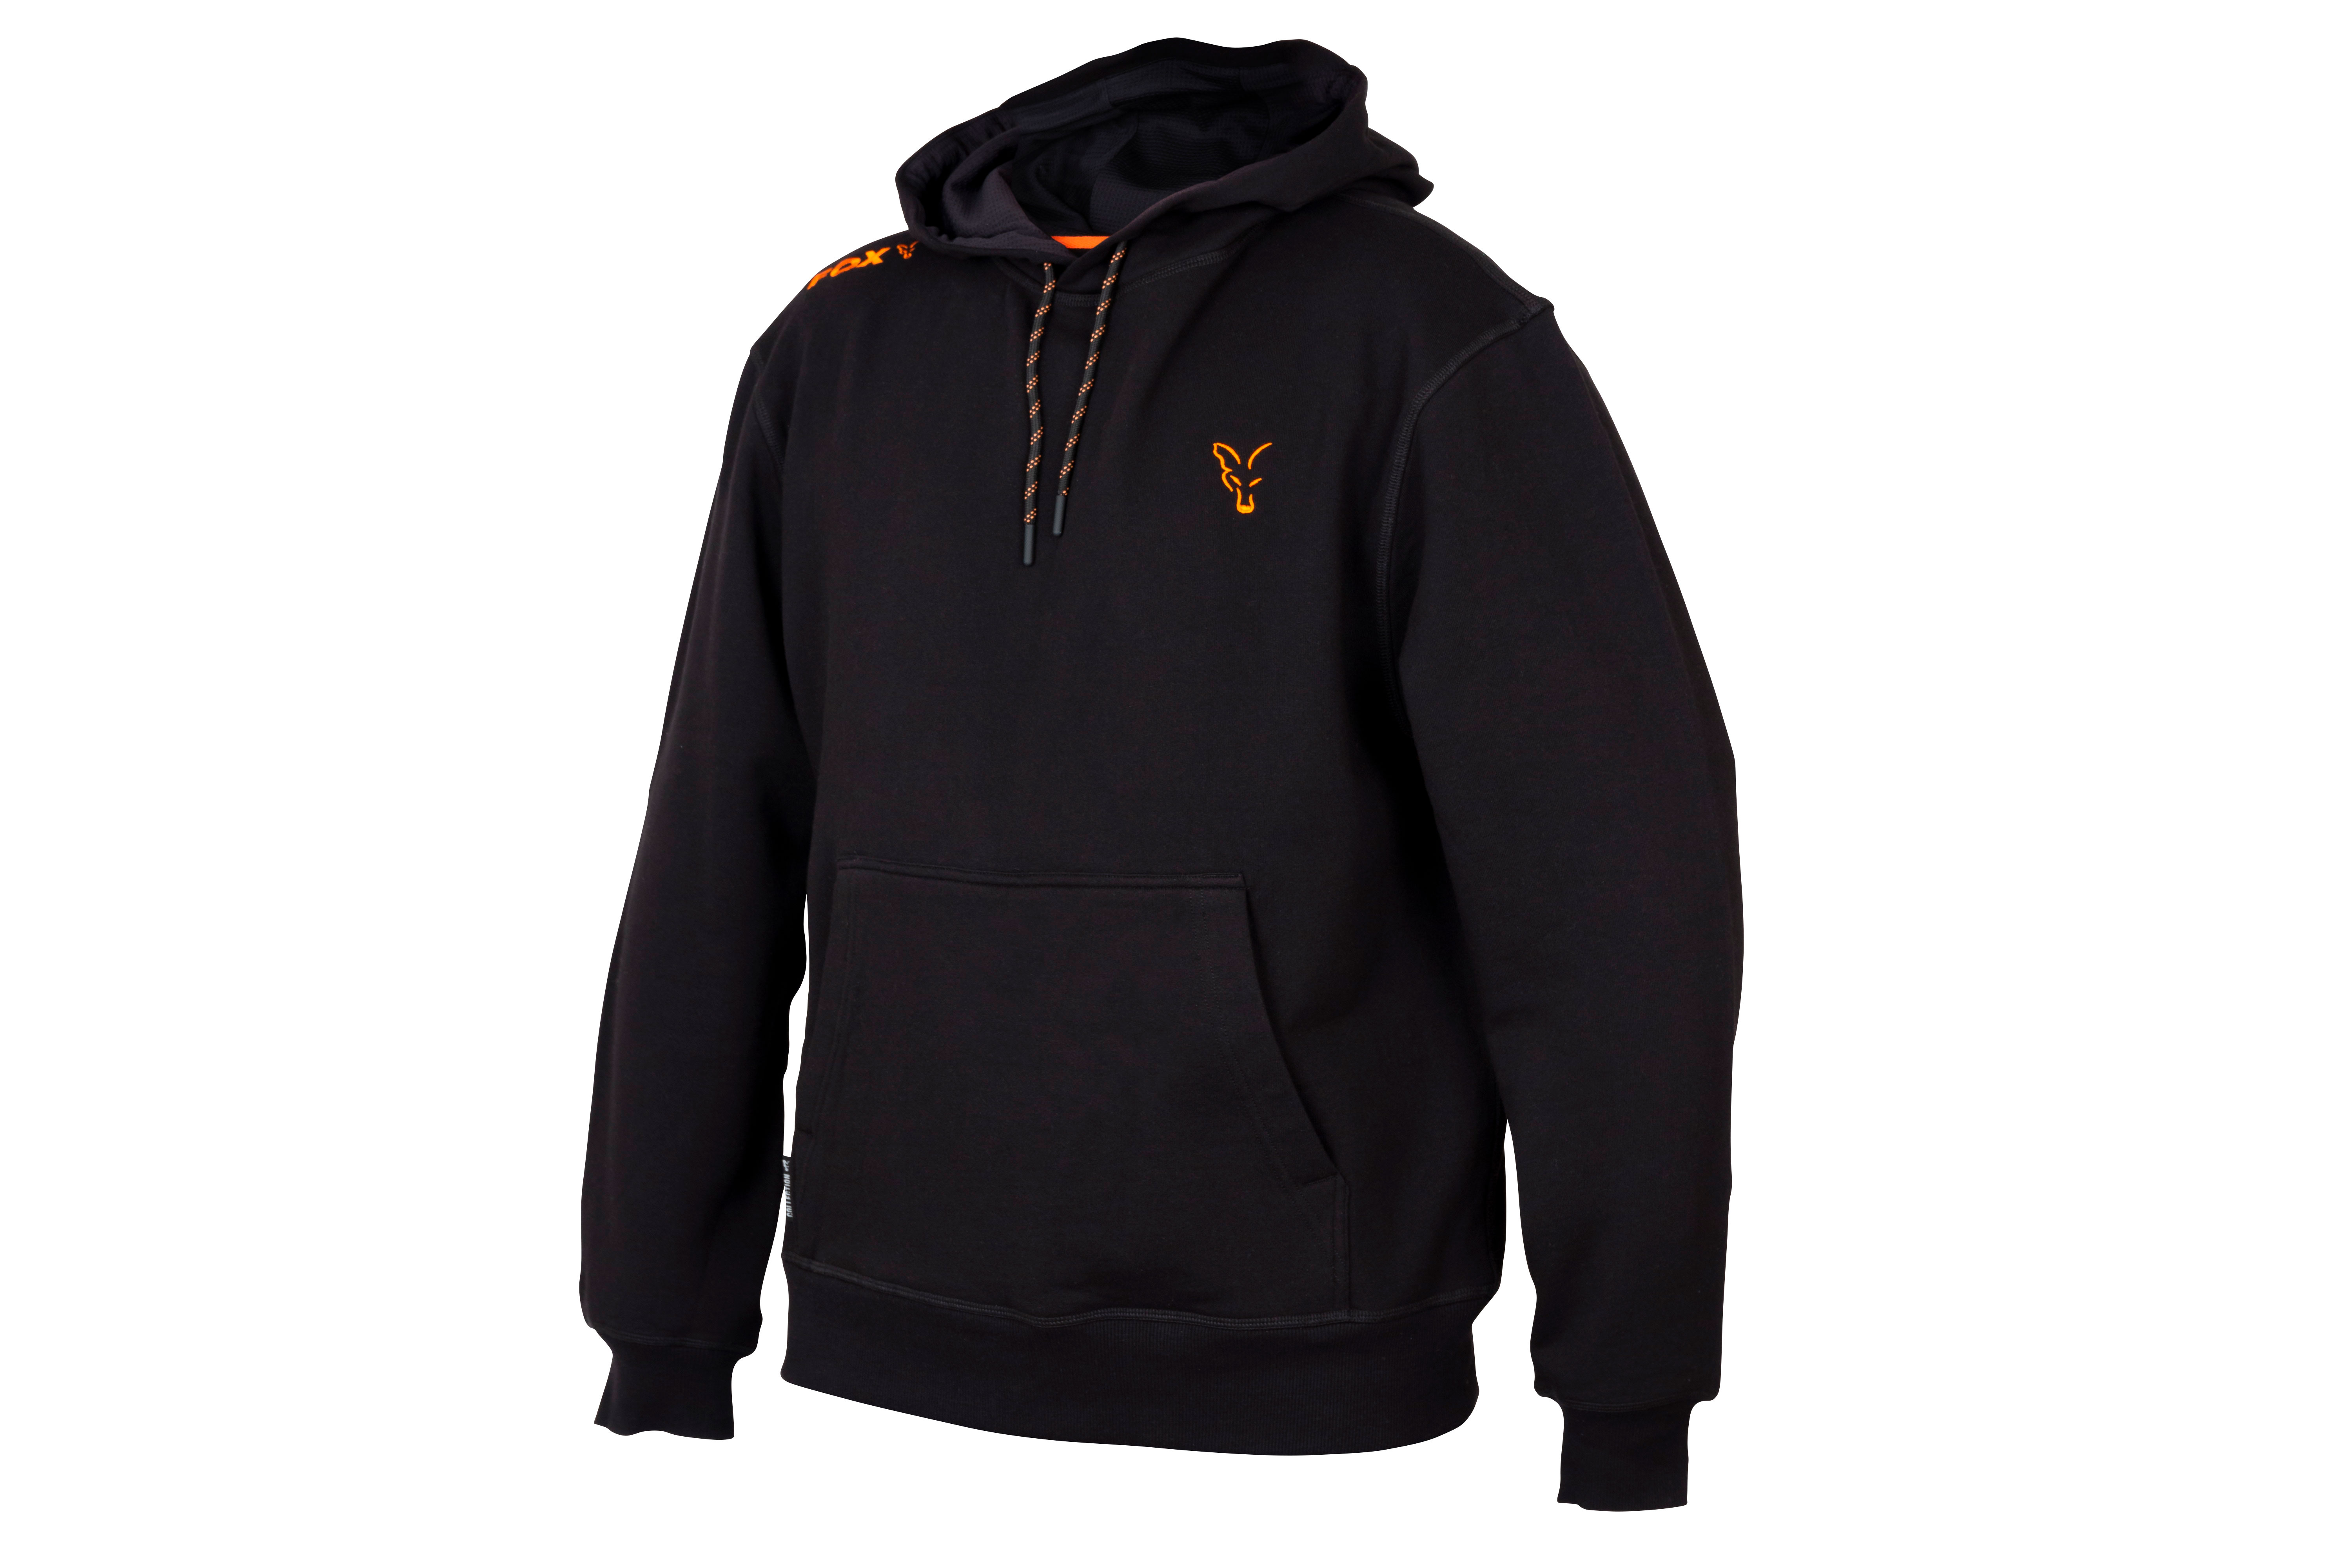 Fox Collection Hoody Black/Orange Size S M L XL XXL XXXL Sweatshirt Sweater NEW 